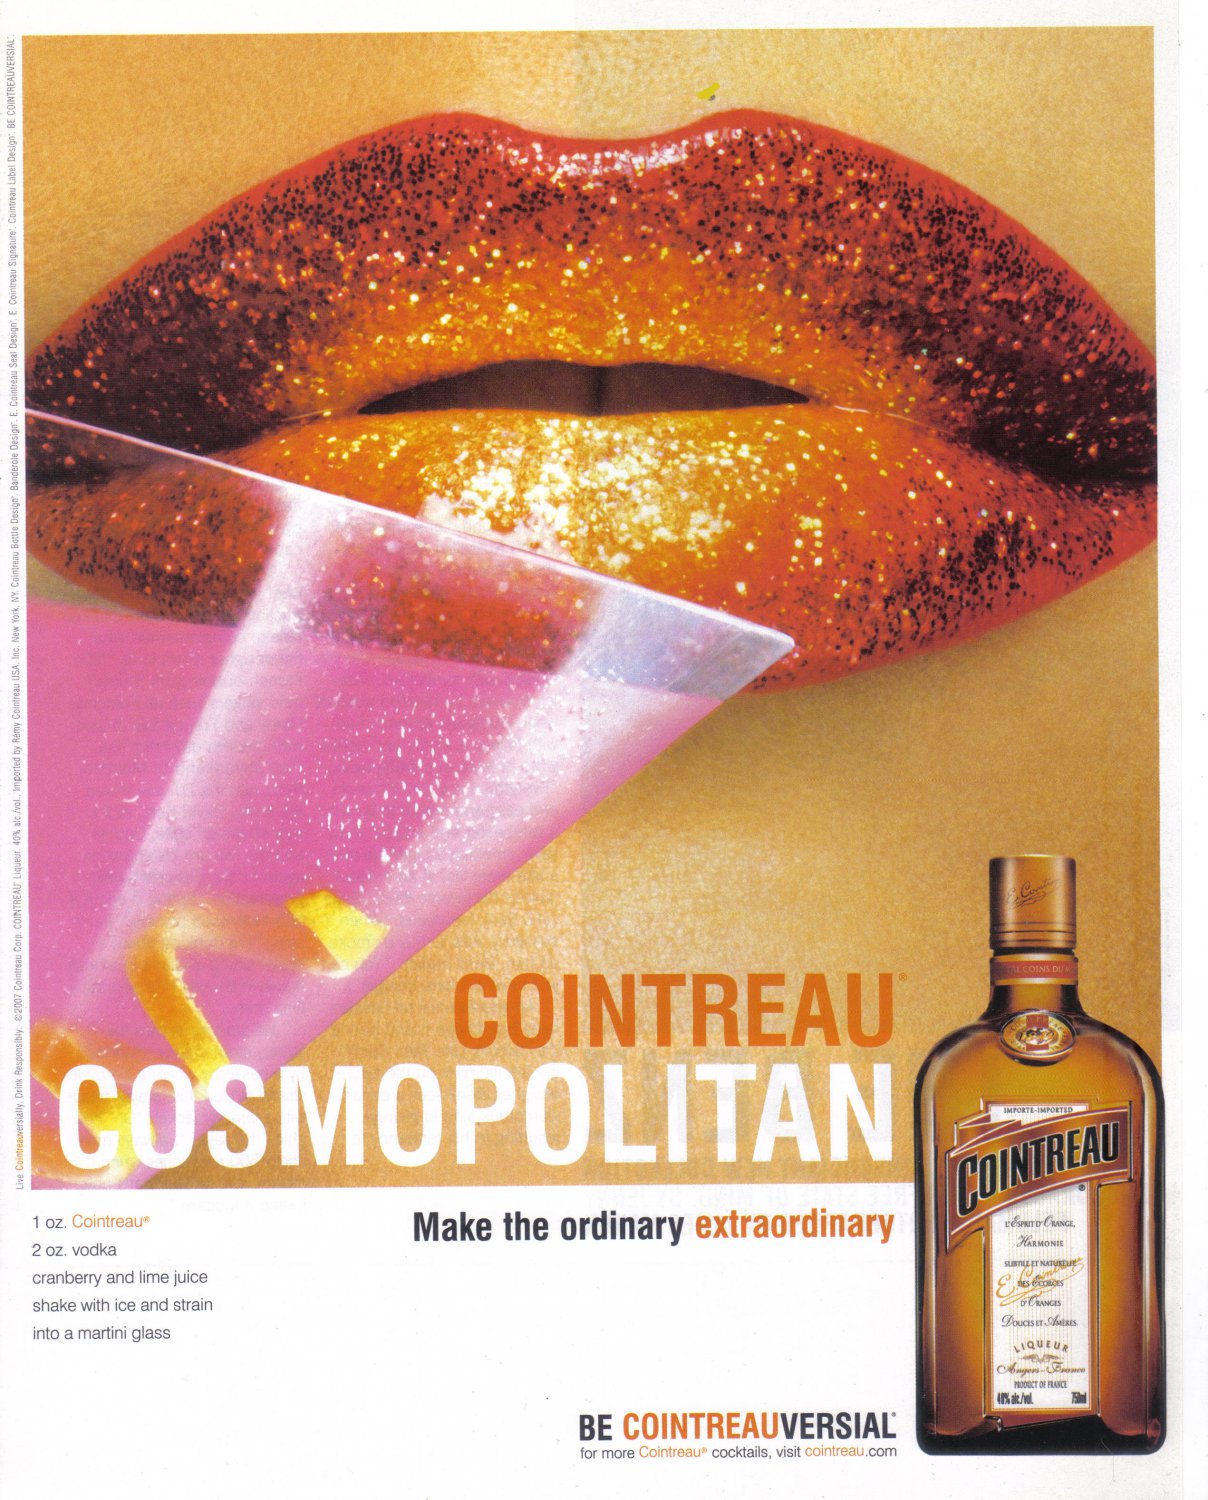 cosmo magazine advertisements